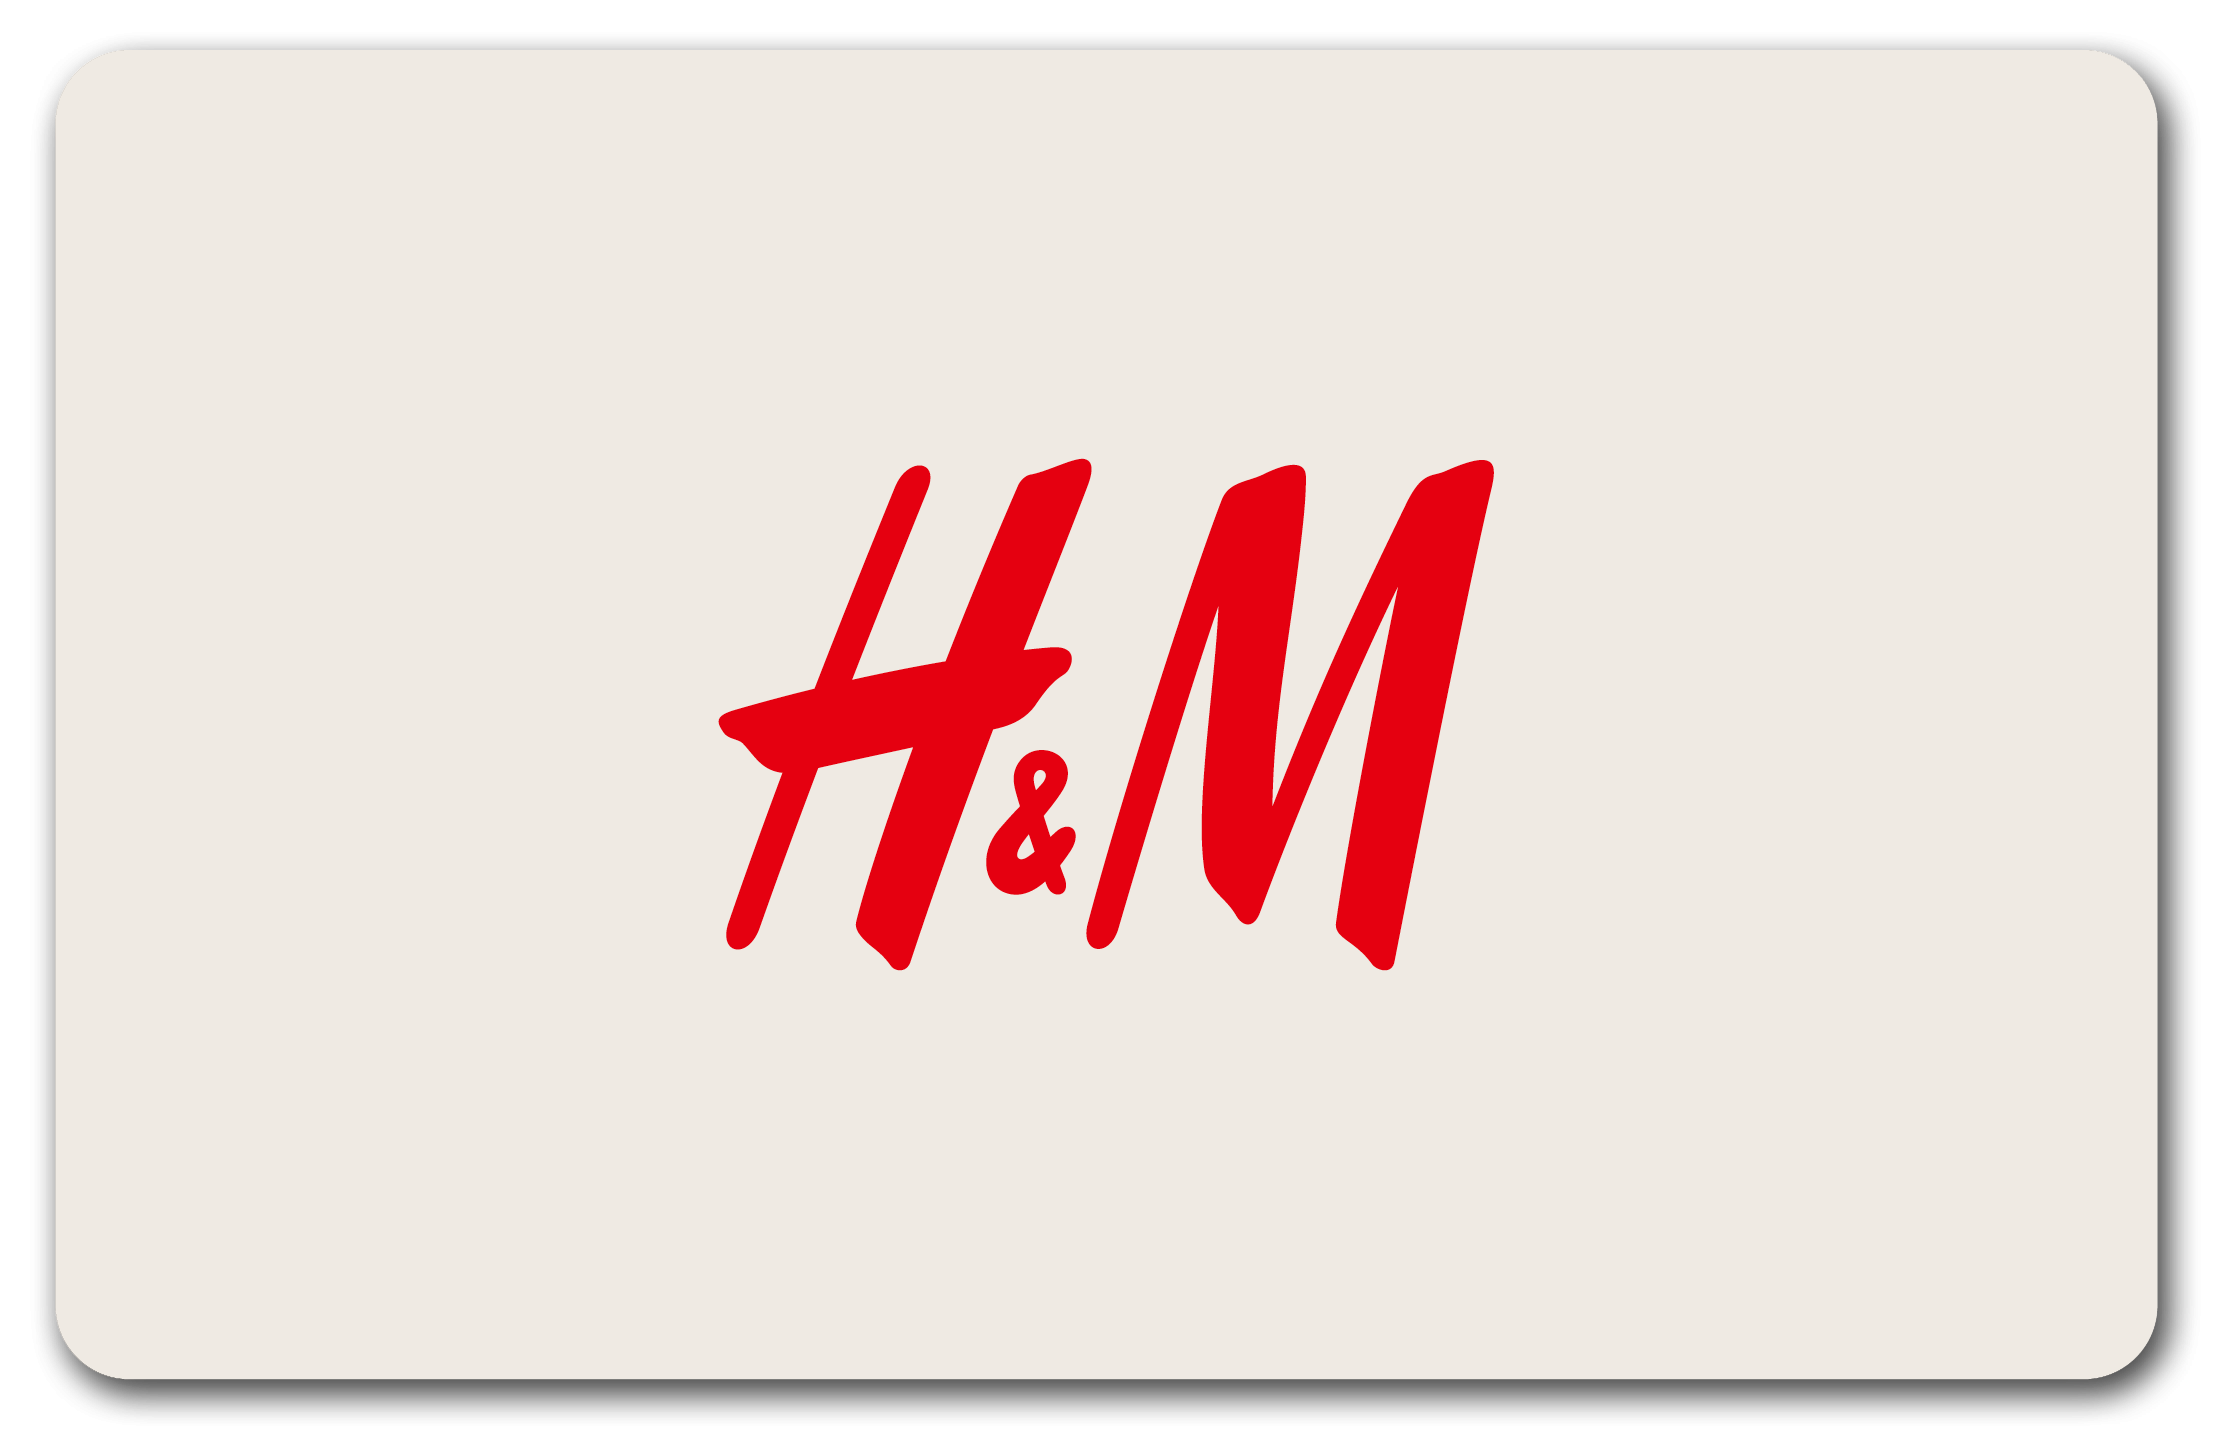 H&M Lille